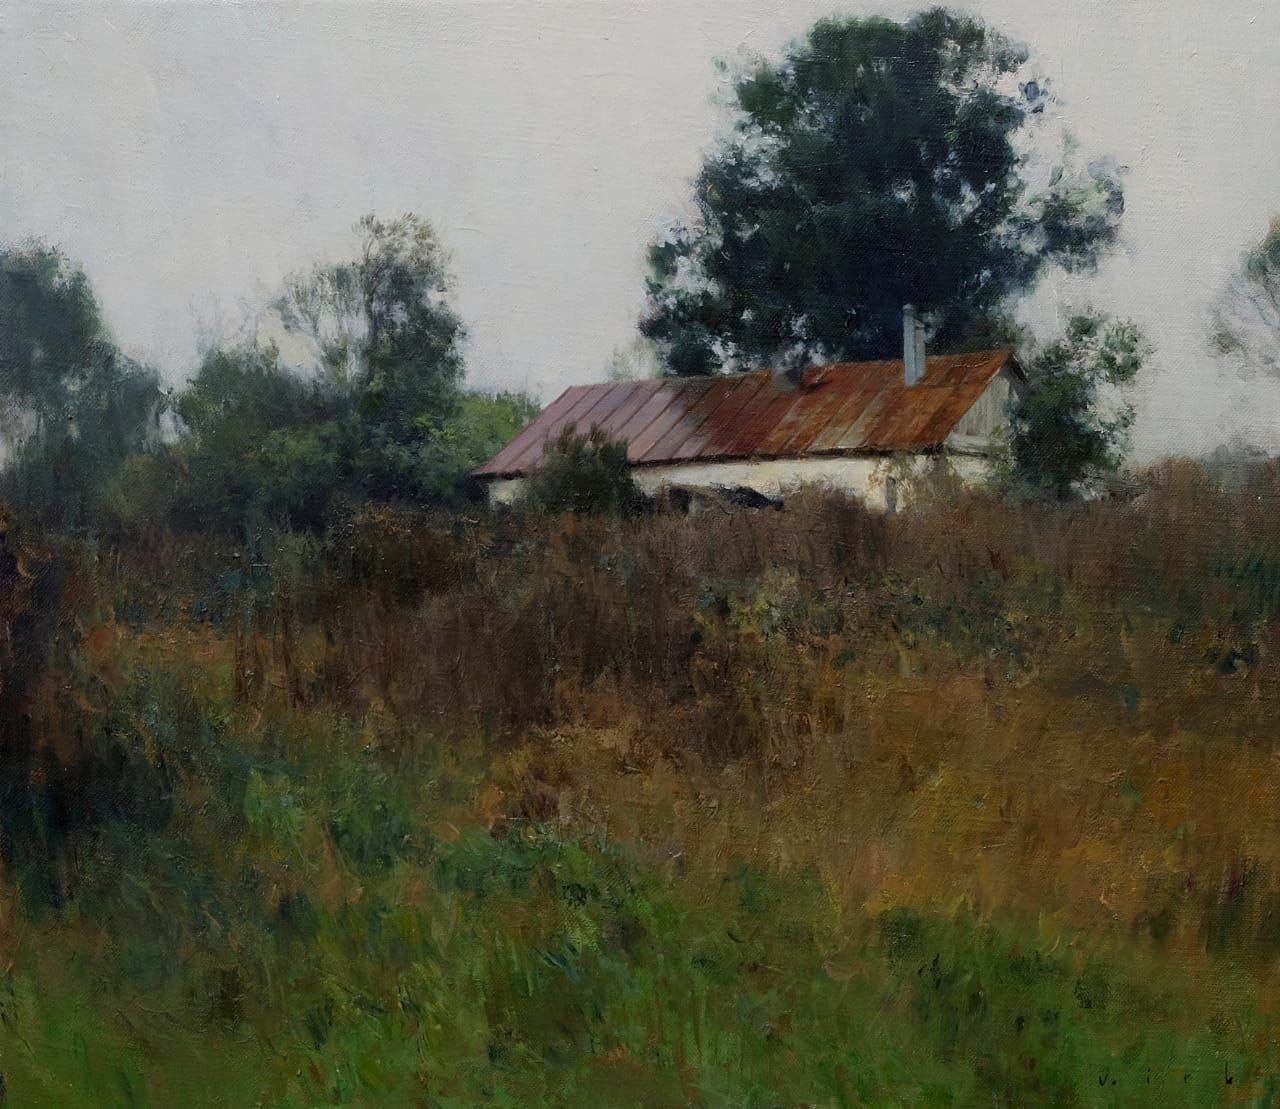  - 1, Vladimir Kirillov, Buy the painting Oil